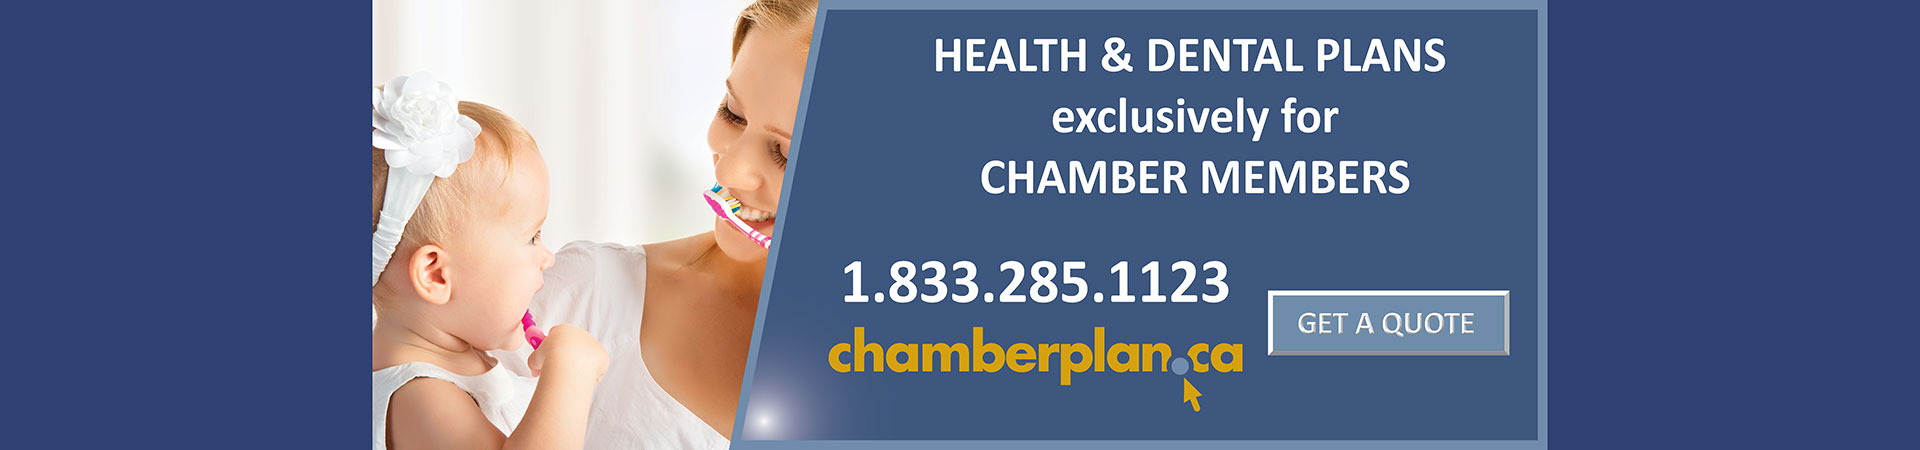 chamber-plan-health-dental-plans